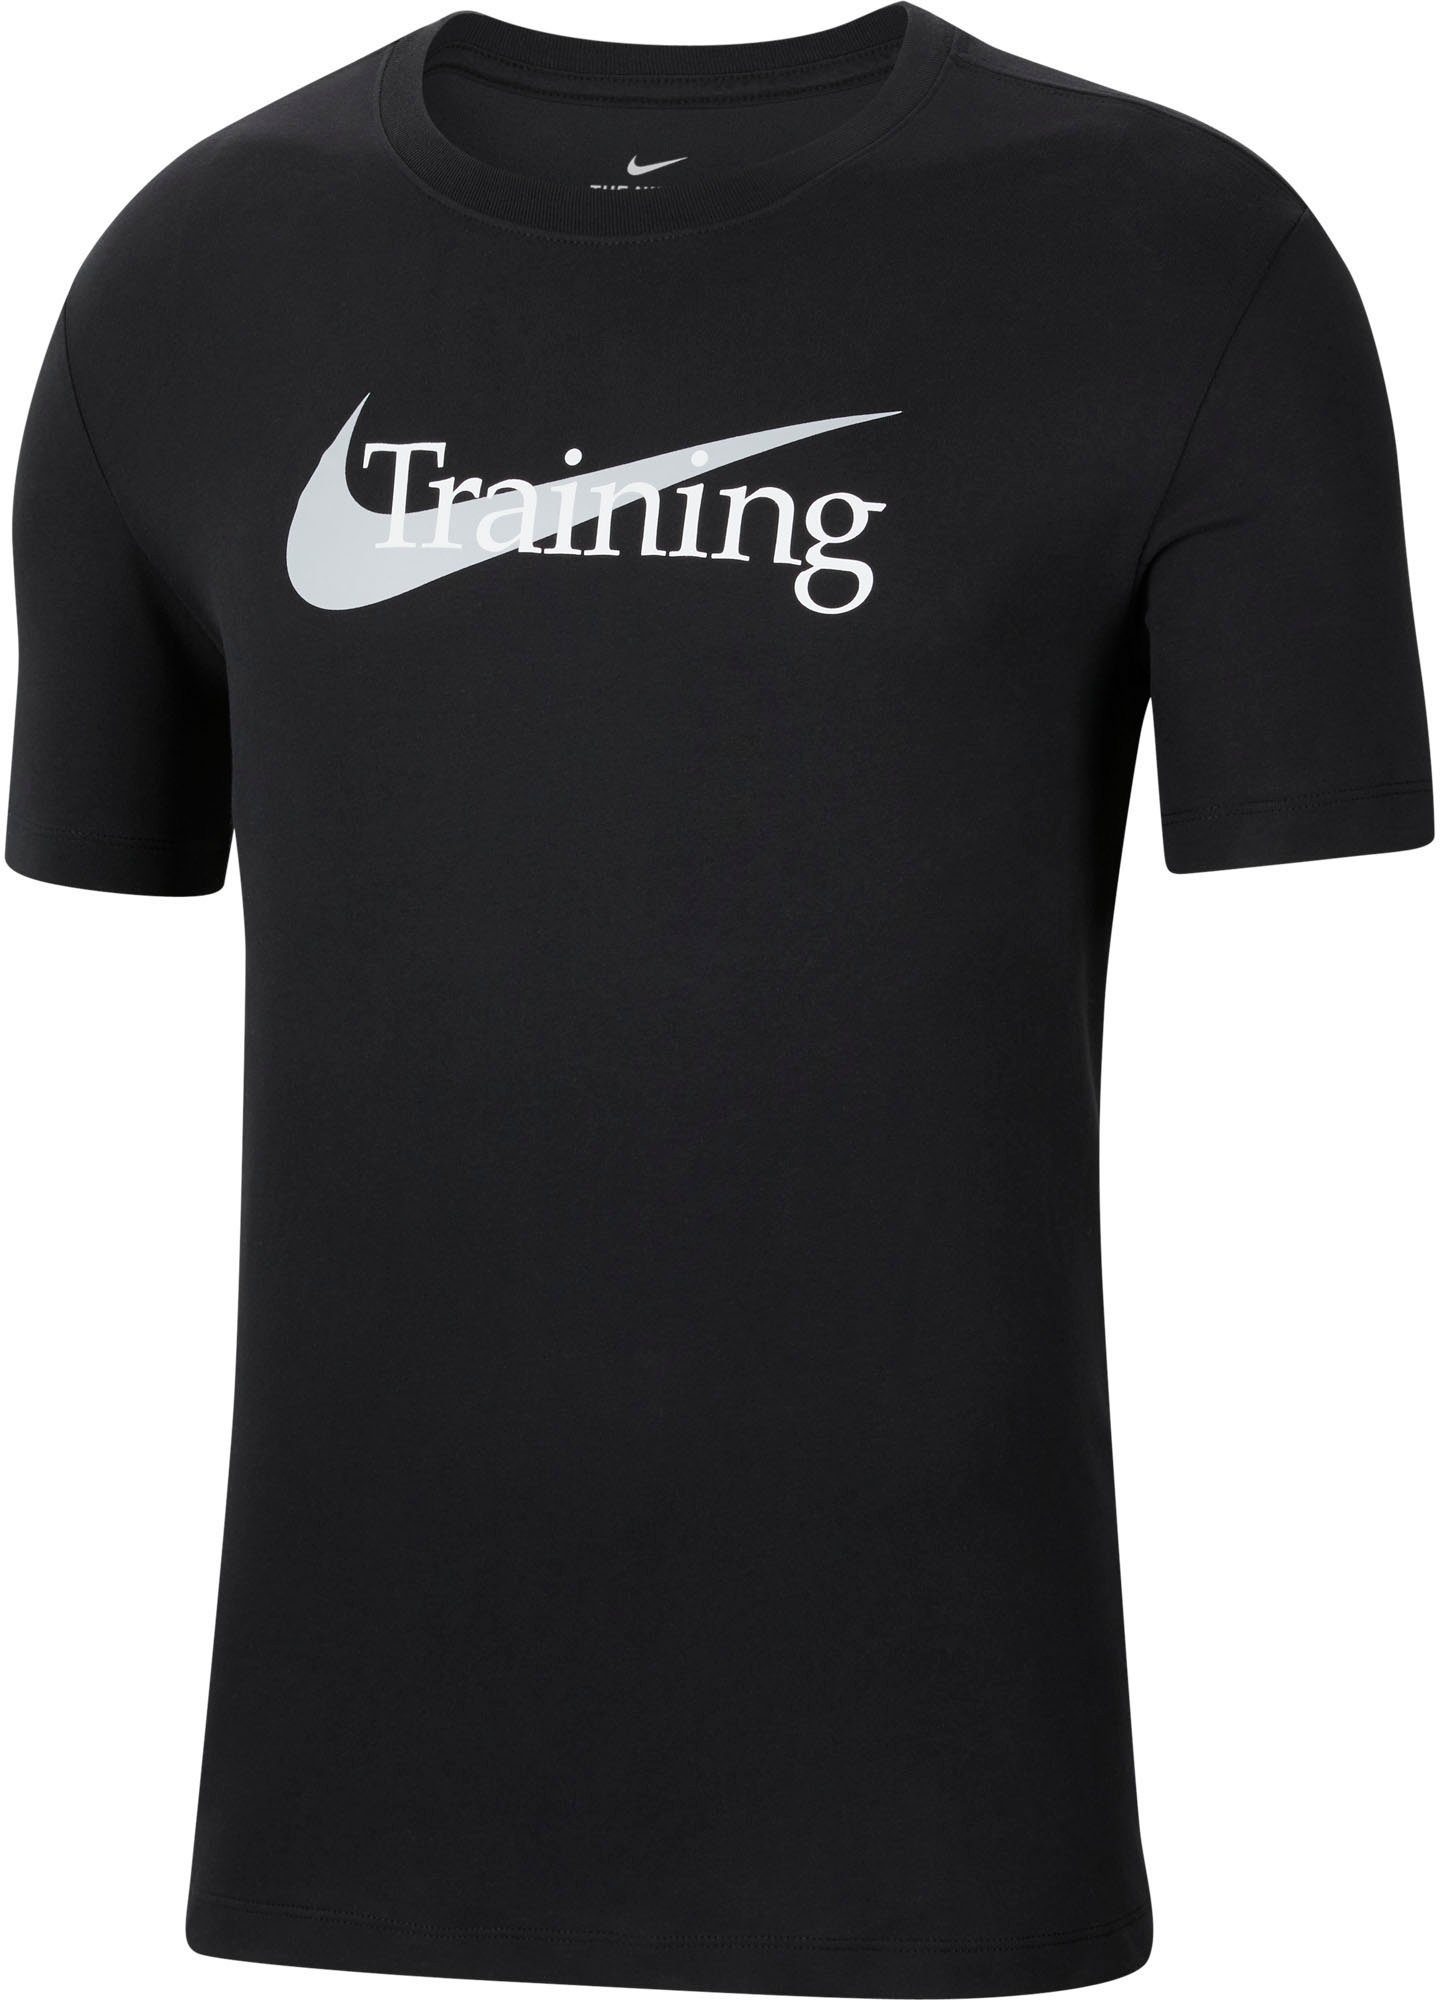 T-Shirt Swoosh schwarz Nike Trainingsshirt Training Men's Dri-FIT